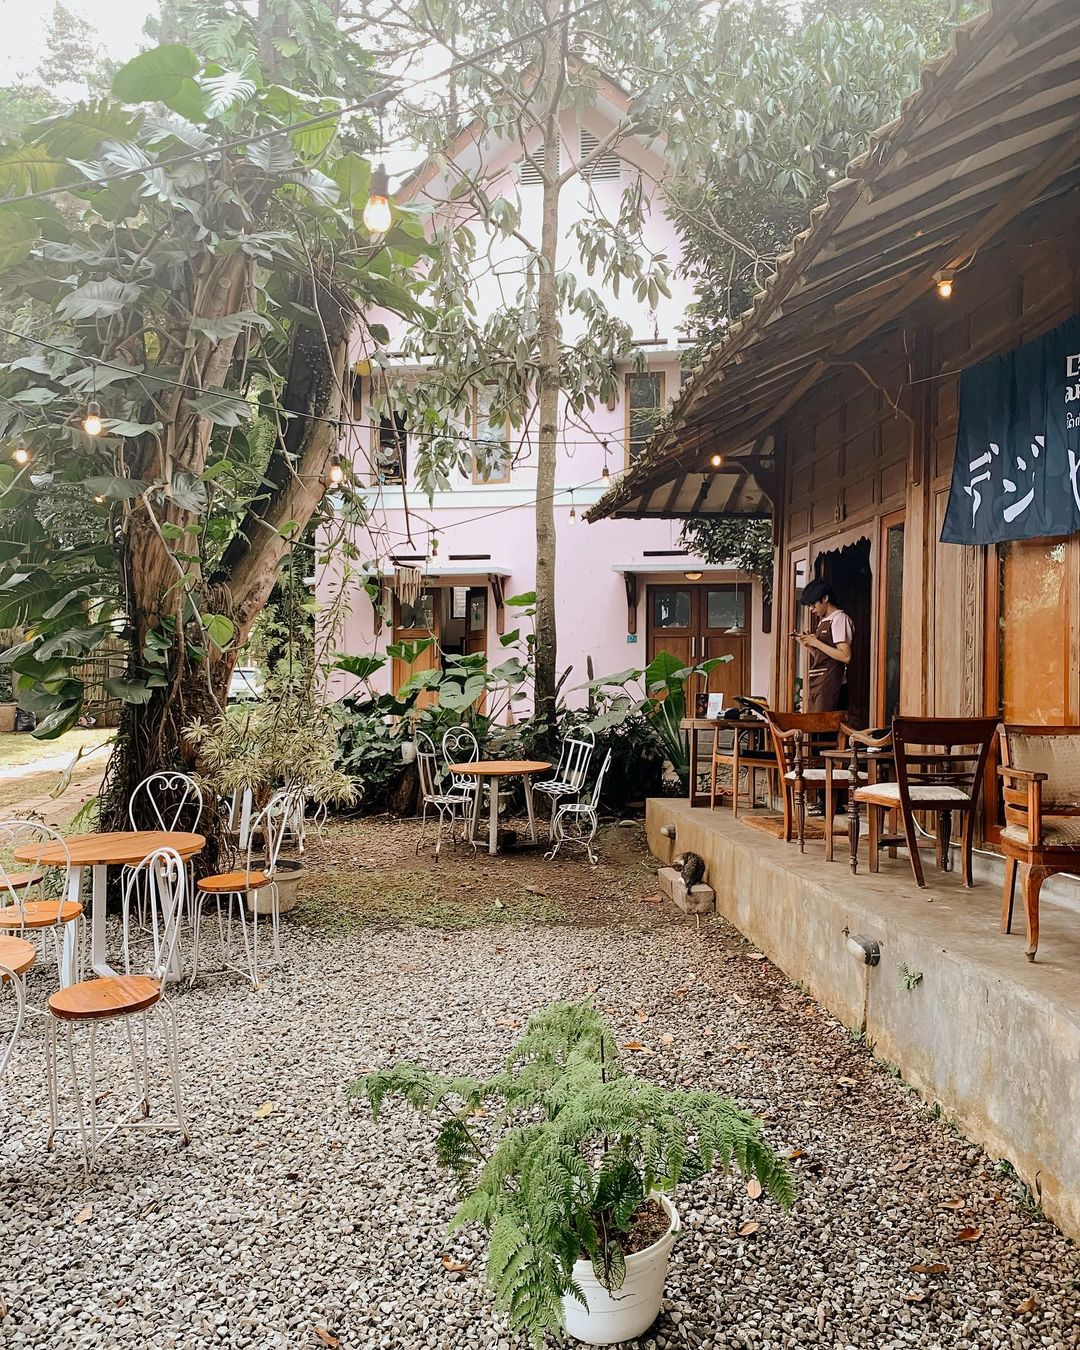 Lokasi De Javan Coffee Eatery Bandung Image From @acaffeinman